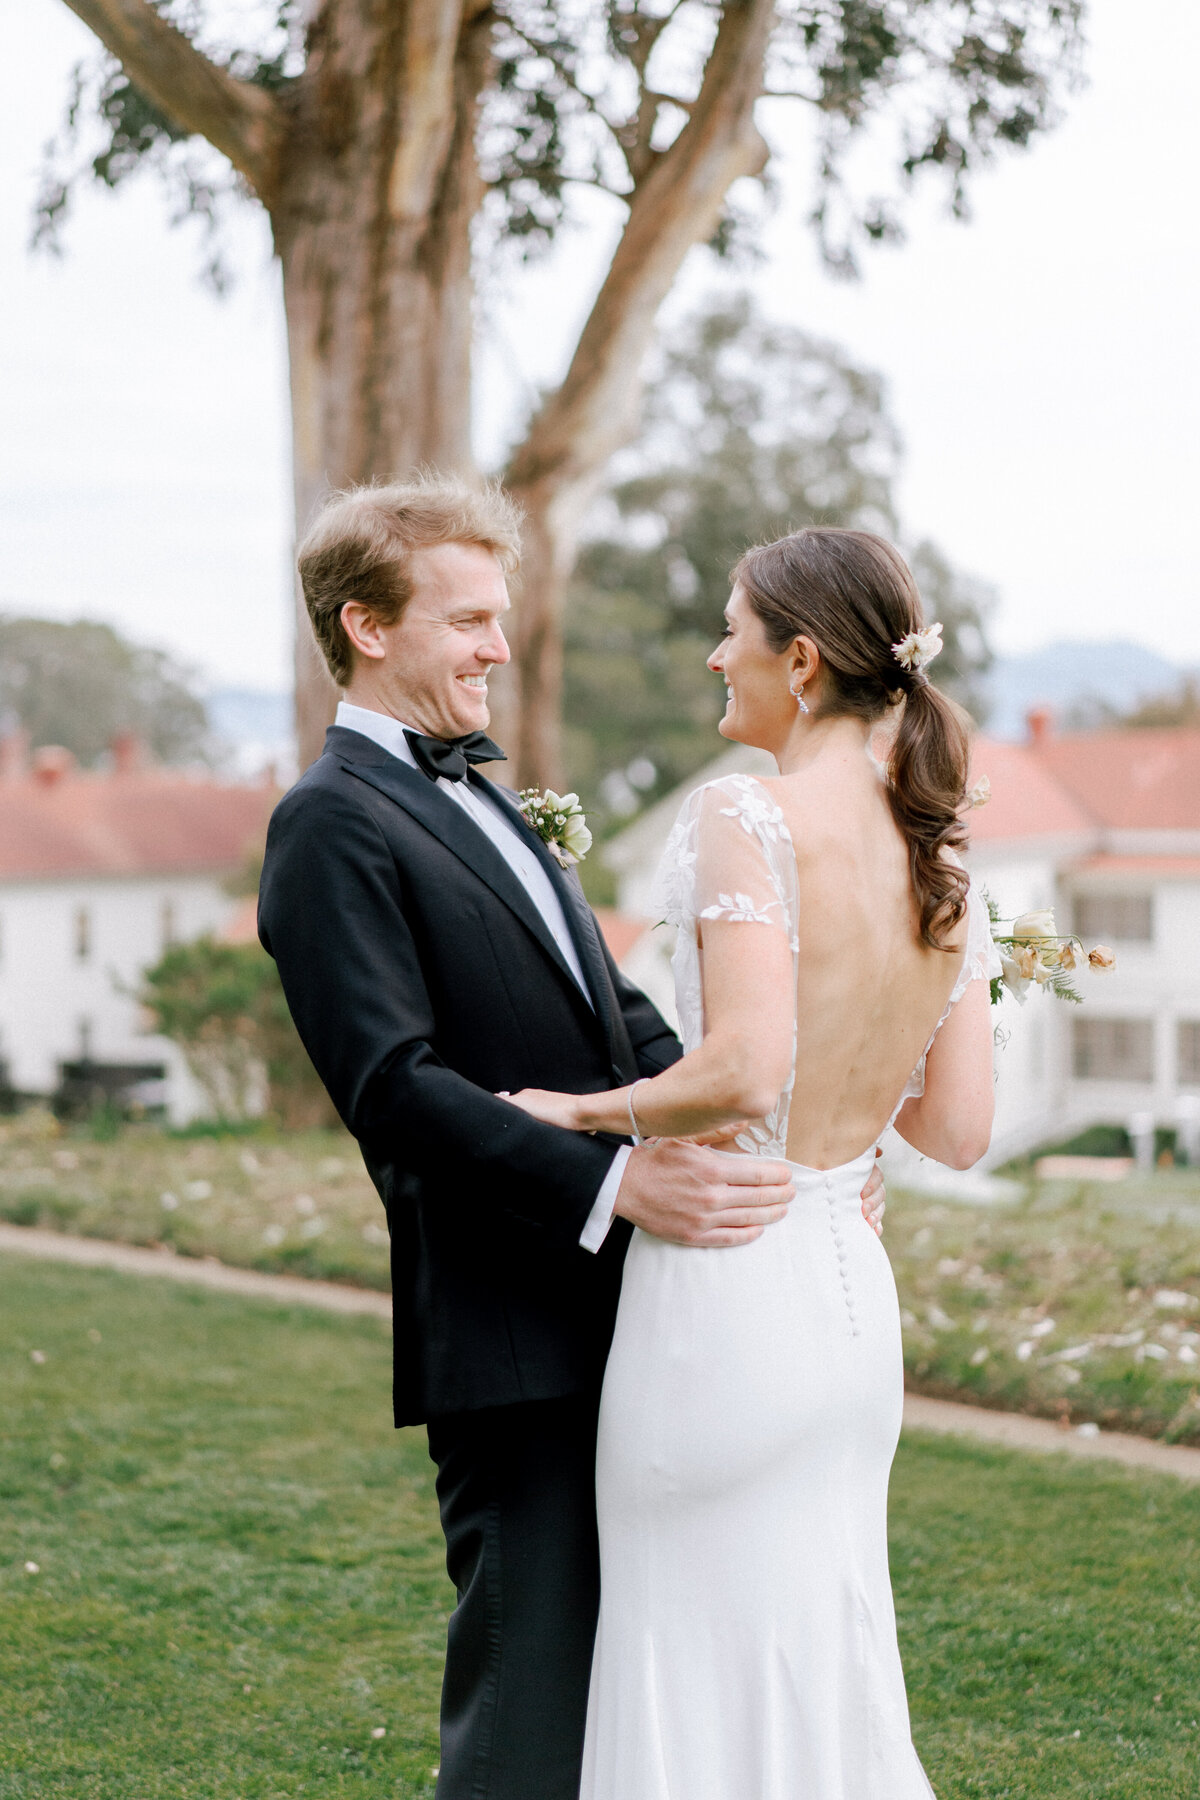 JESSICA RIEKE PHOTOGRAPHY - KRISTEN AND SAM WEDDING-380